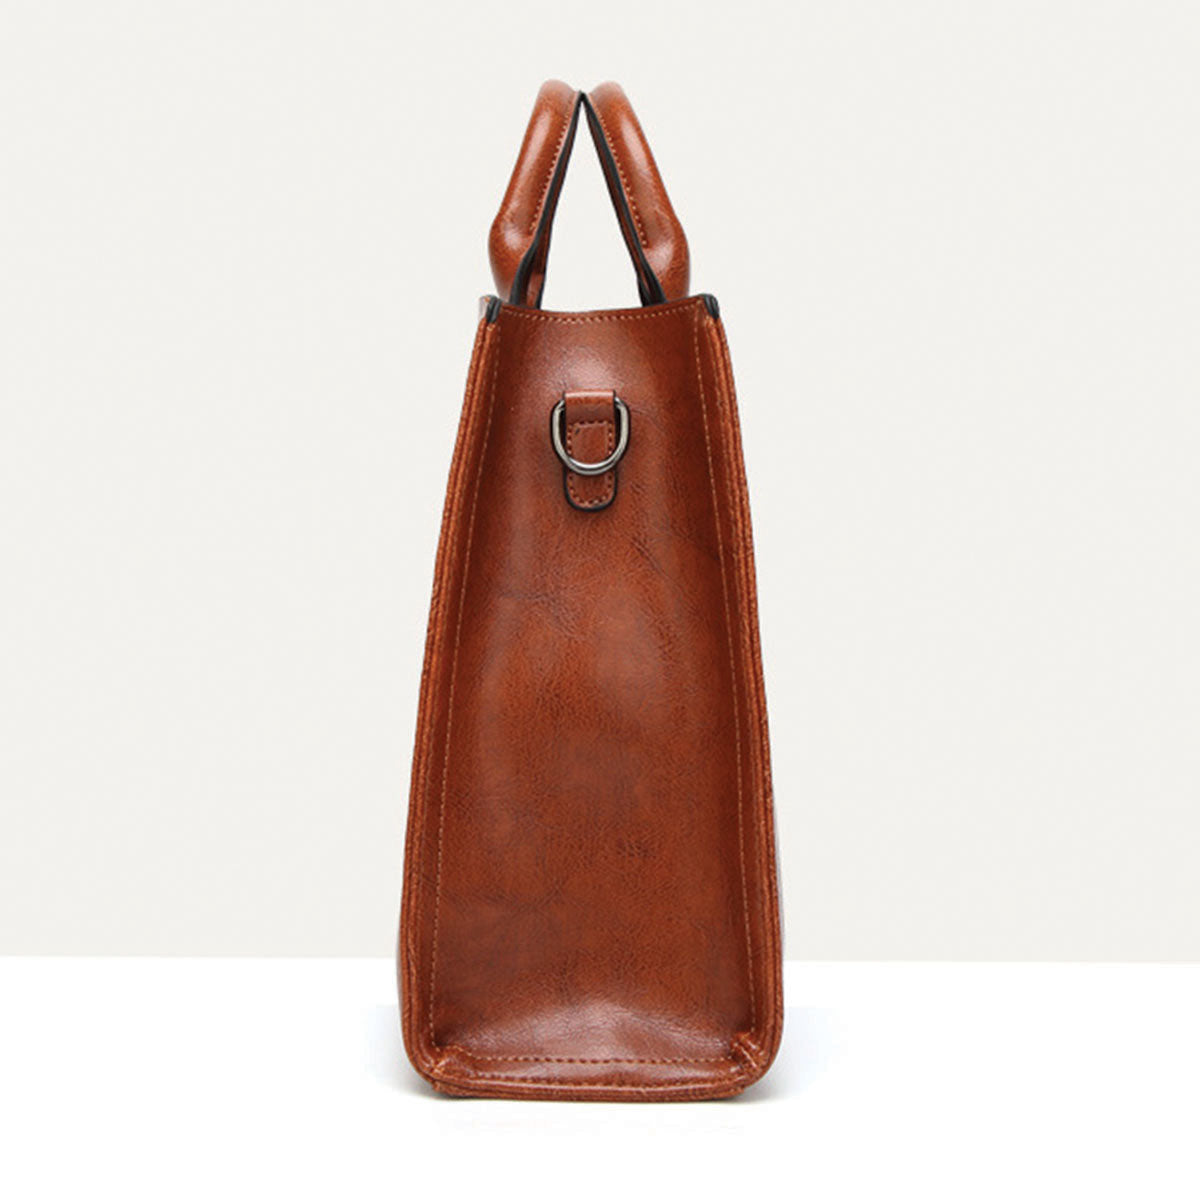 Your Best Companion - Belgian Malinois Luxury Handbag V1